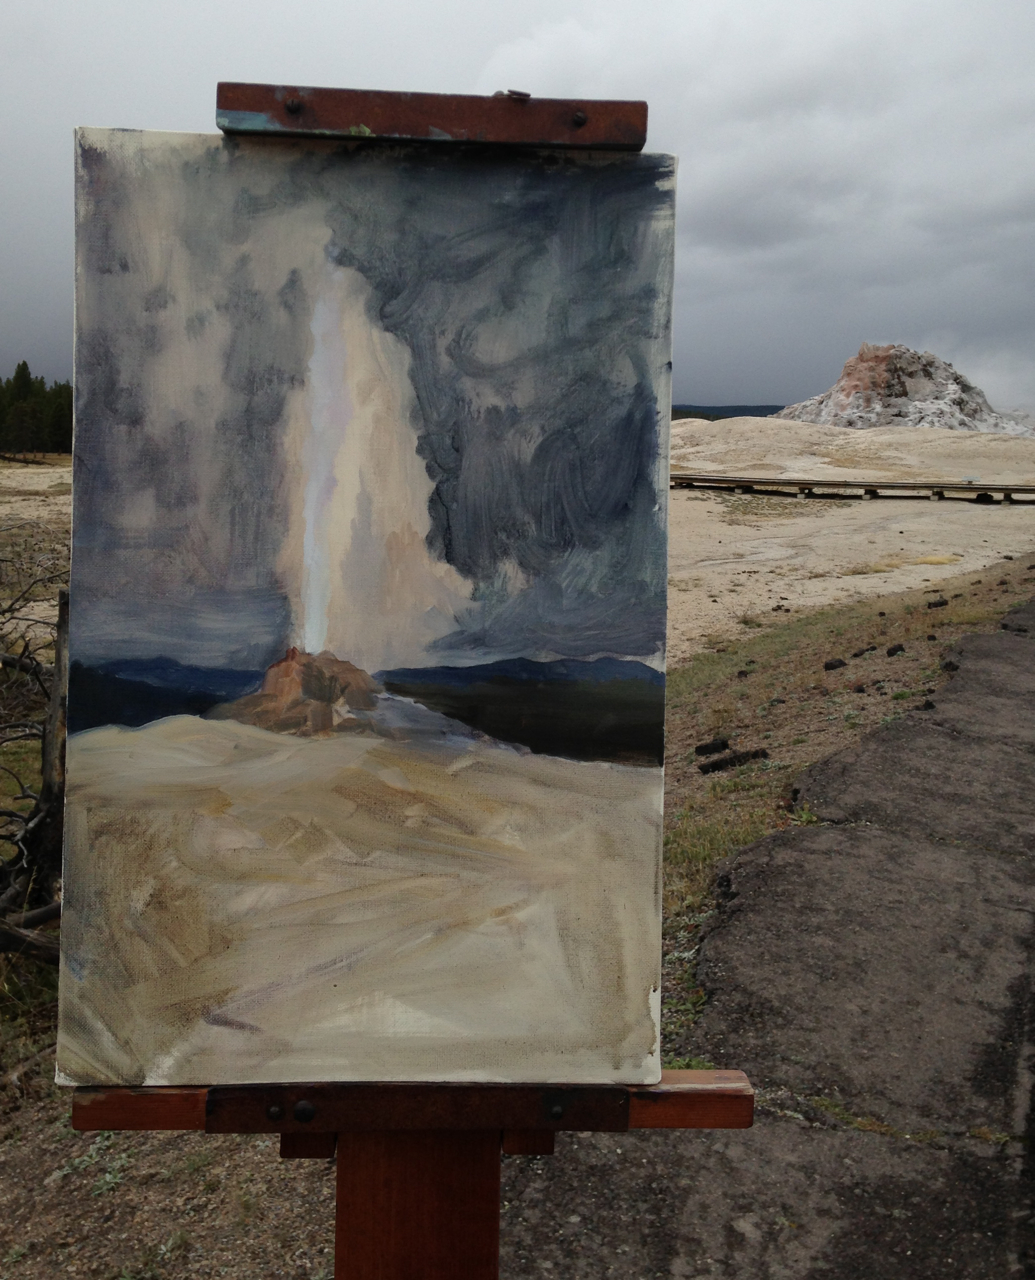 Giant Geyser in Yellowstone National Park, plein air painting by Stefan Baumann in progress on location